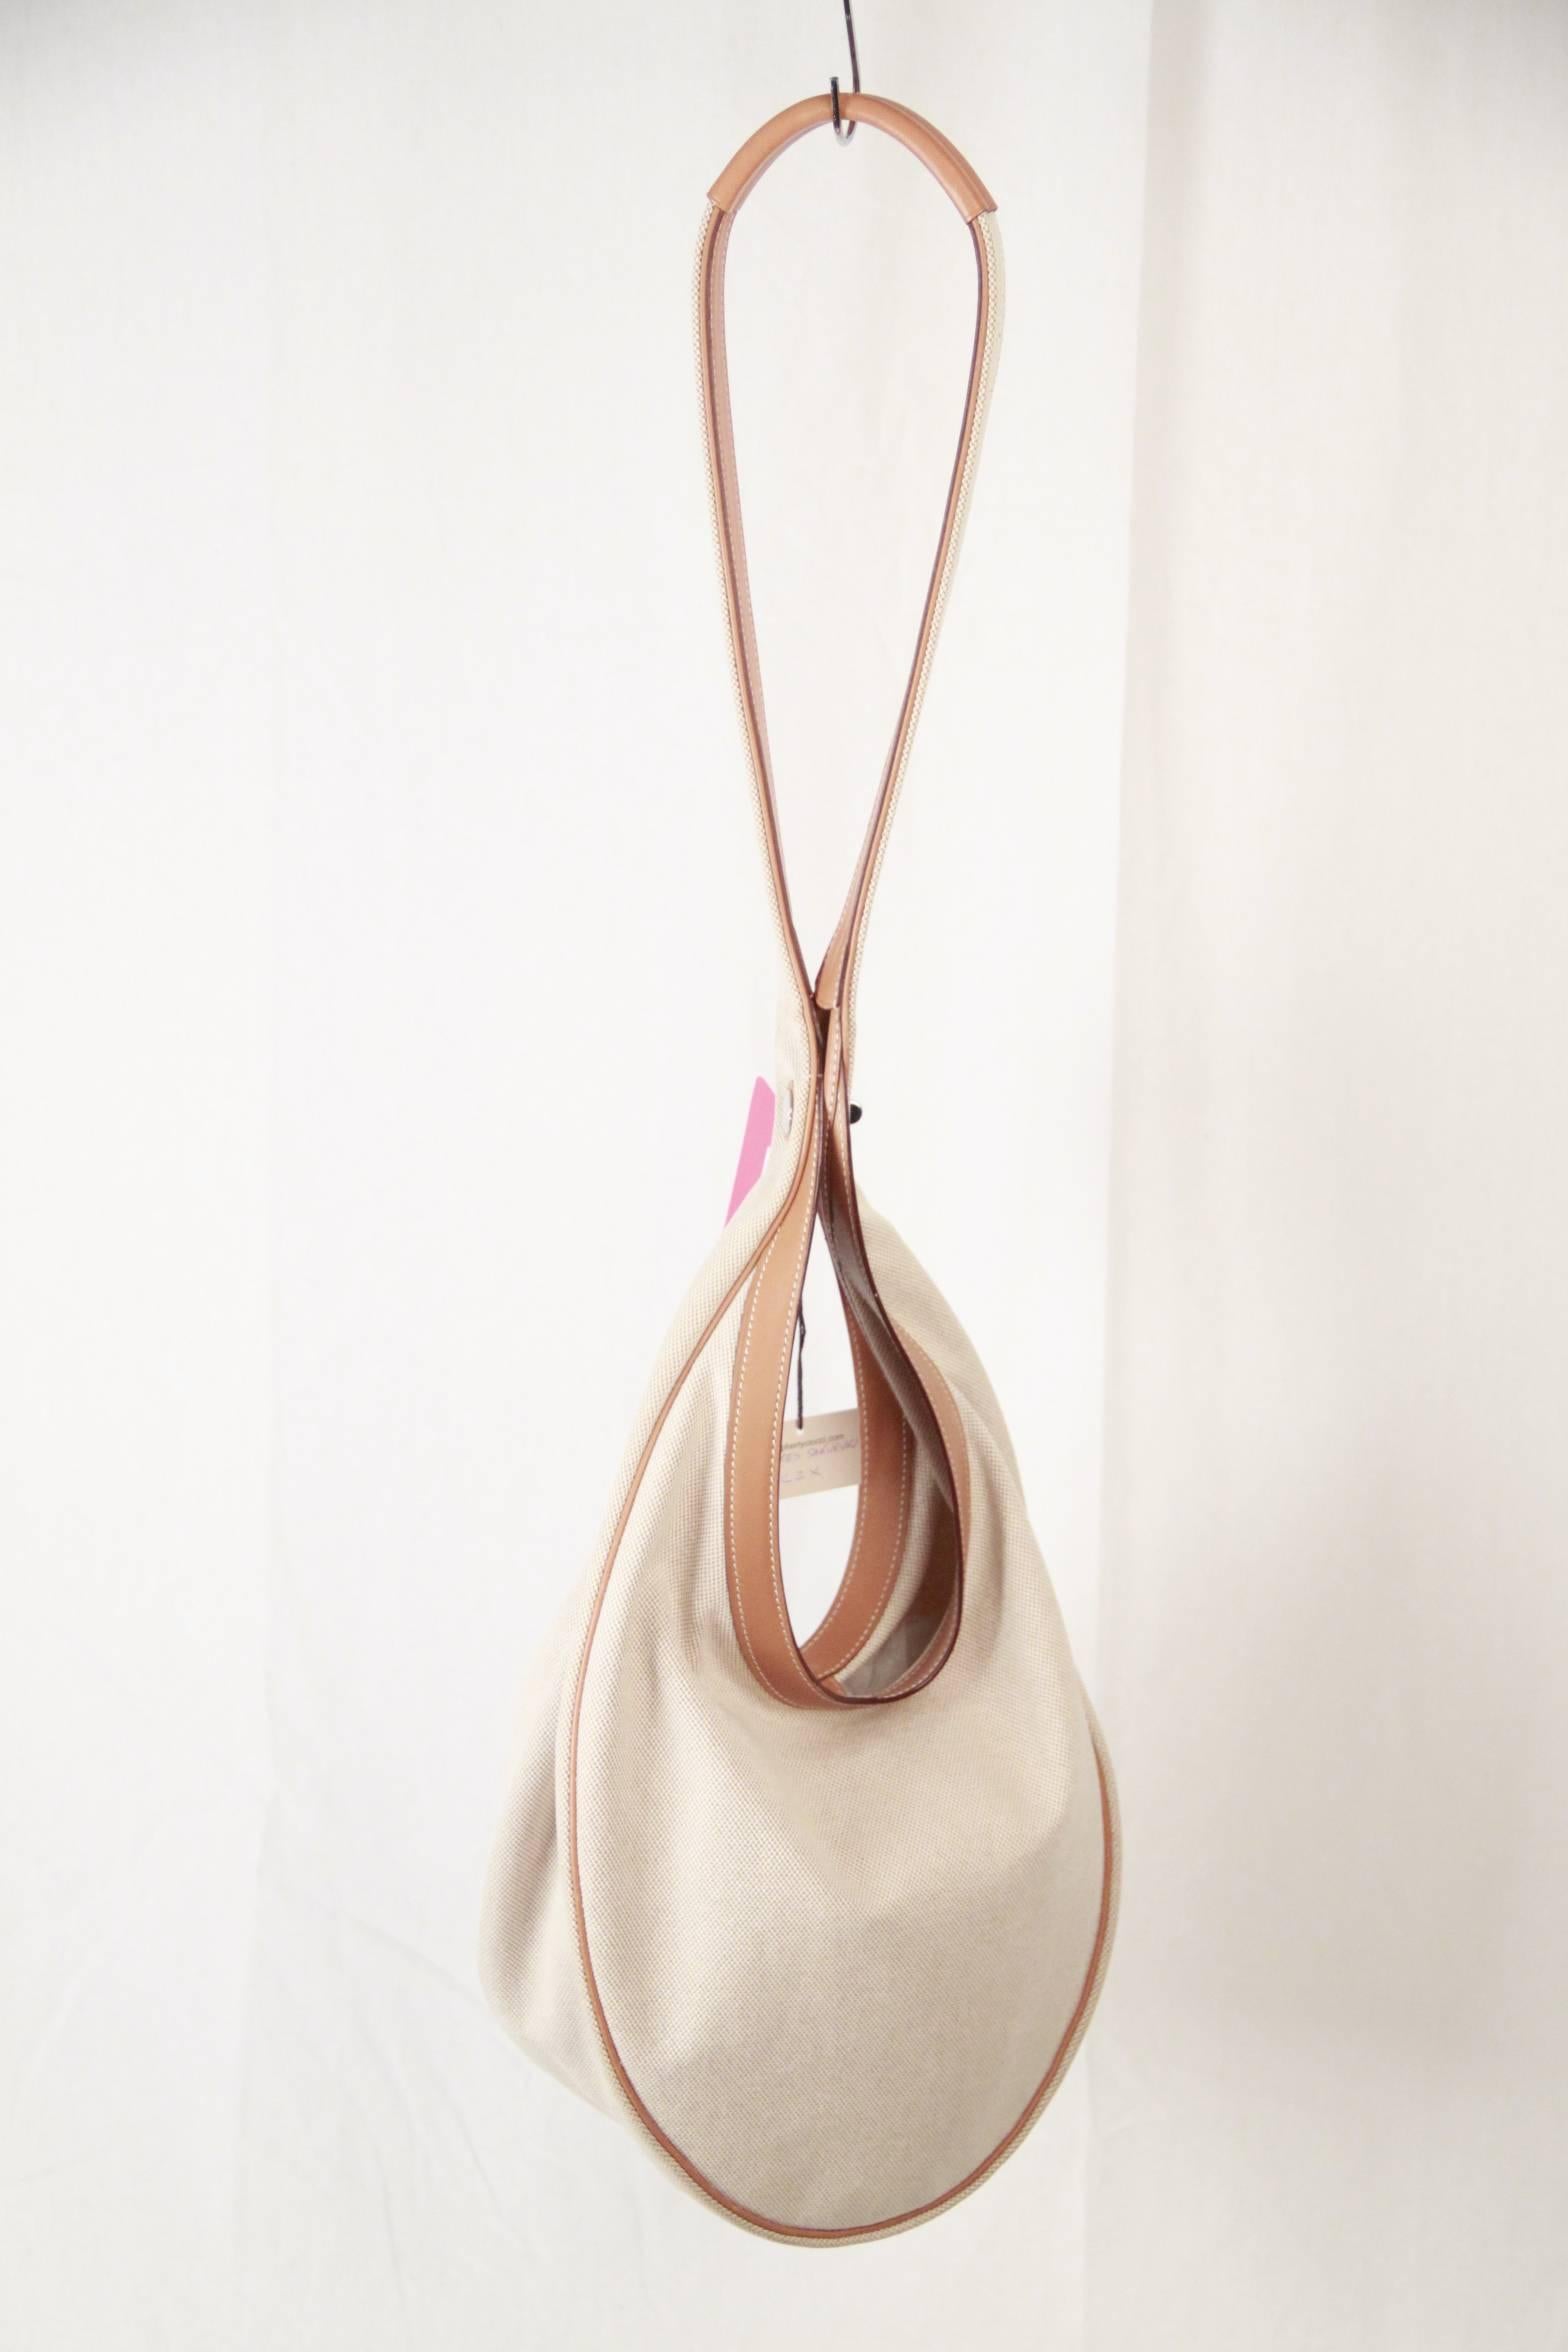 - 'Sakuruko' shoulder bag by Hermes, crafted in beige canvas 
- Flat leather shoulder bag
- Palladium hardware
- Snap closure
- Measurements: 10 x 11 x 4.5 inches - 25,4 x 28 x 11,5 cm 
- Shoulder Drop: 21 inches - 53,3 cm

Logos / Tags: 'HERMES